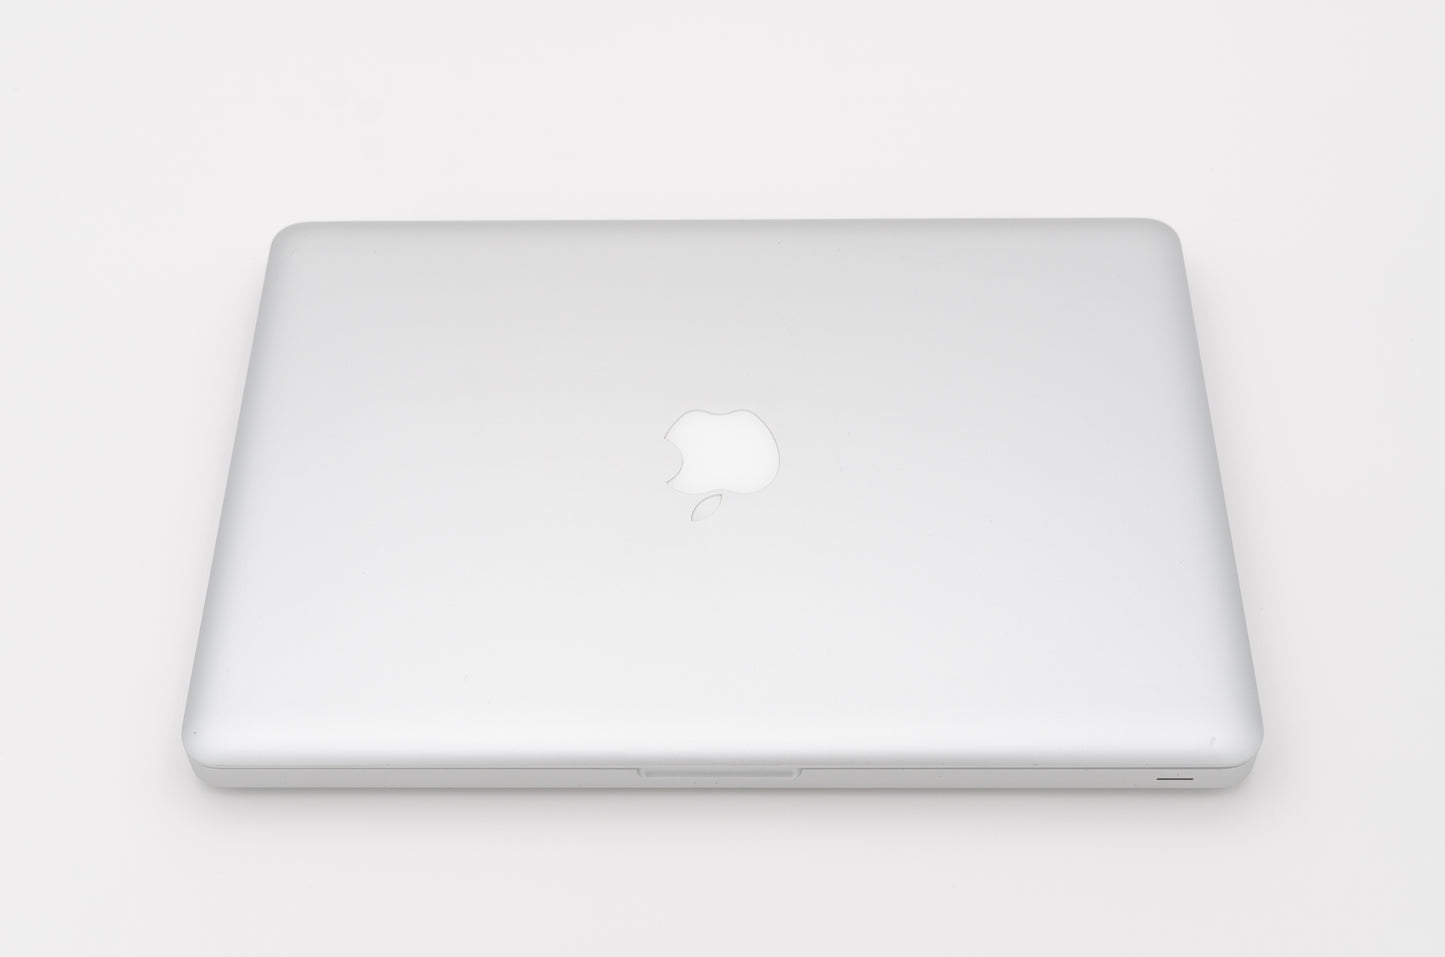 apple-early-2013-13.3-inch-macbook-pro-a1425-aluminum-dci7 - 3ghz processor, 8gb ram, hd 4000 - 512mb gpu-me662ll/a-3